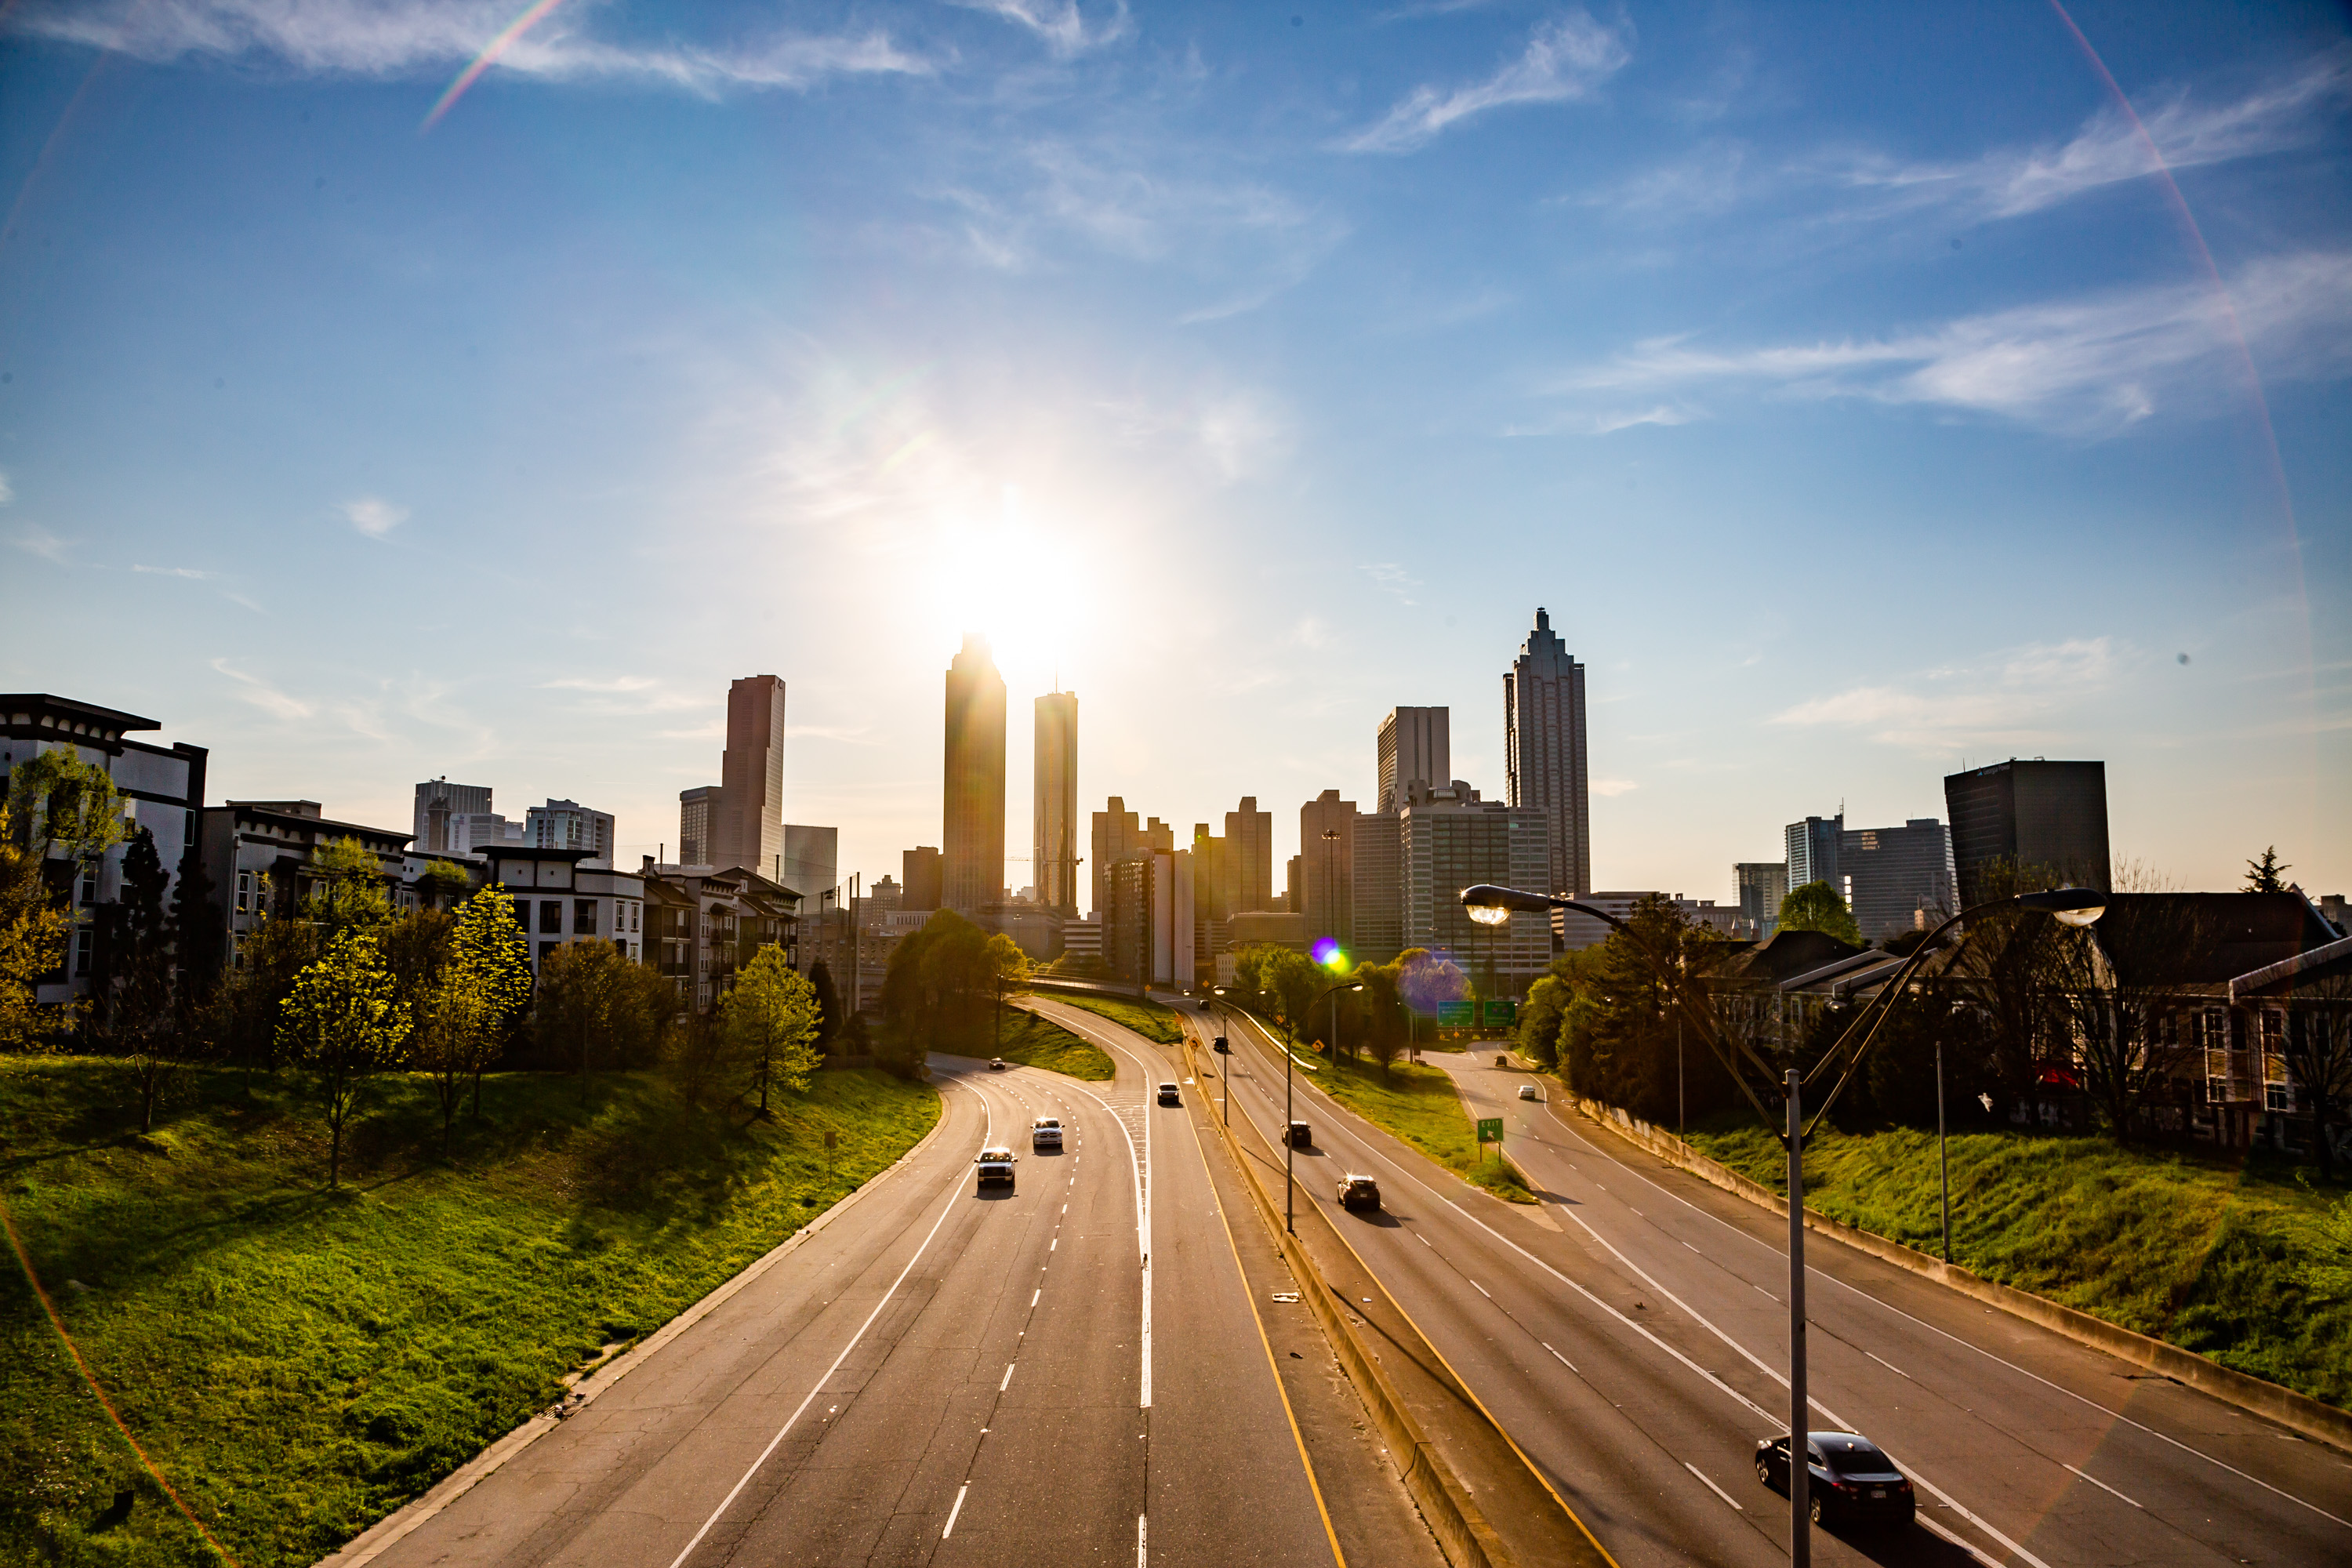 Photograph of Freedom Parkway from the Jackson Street Bridge looking toward downtown Atlanta